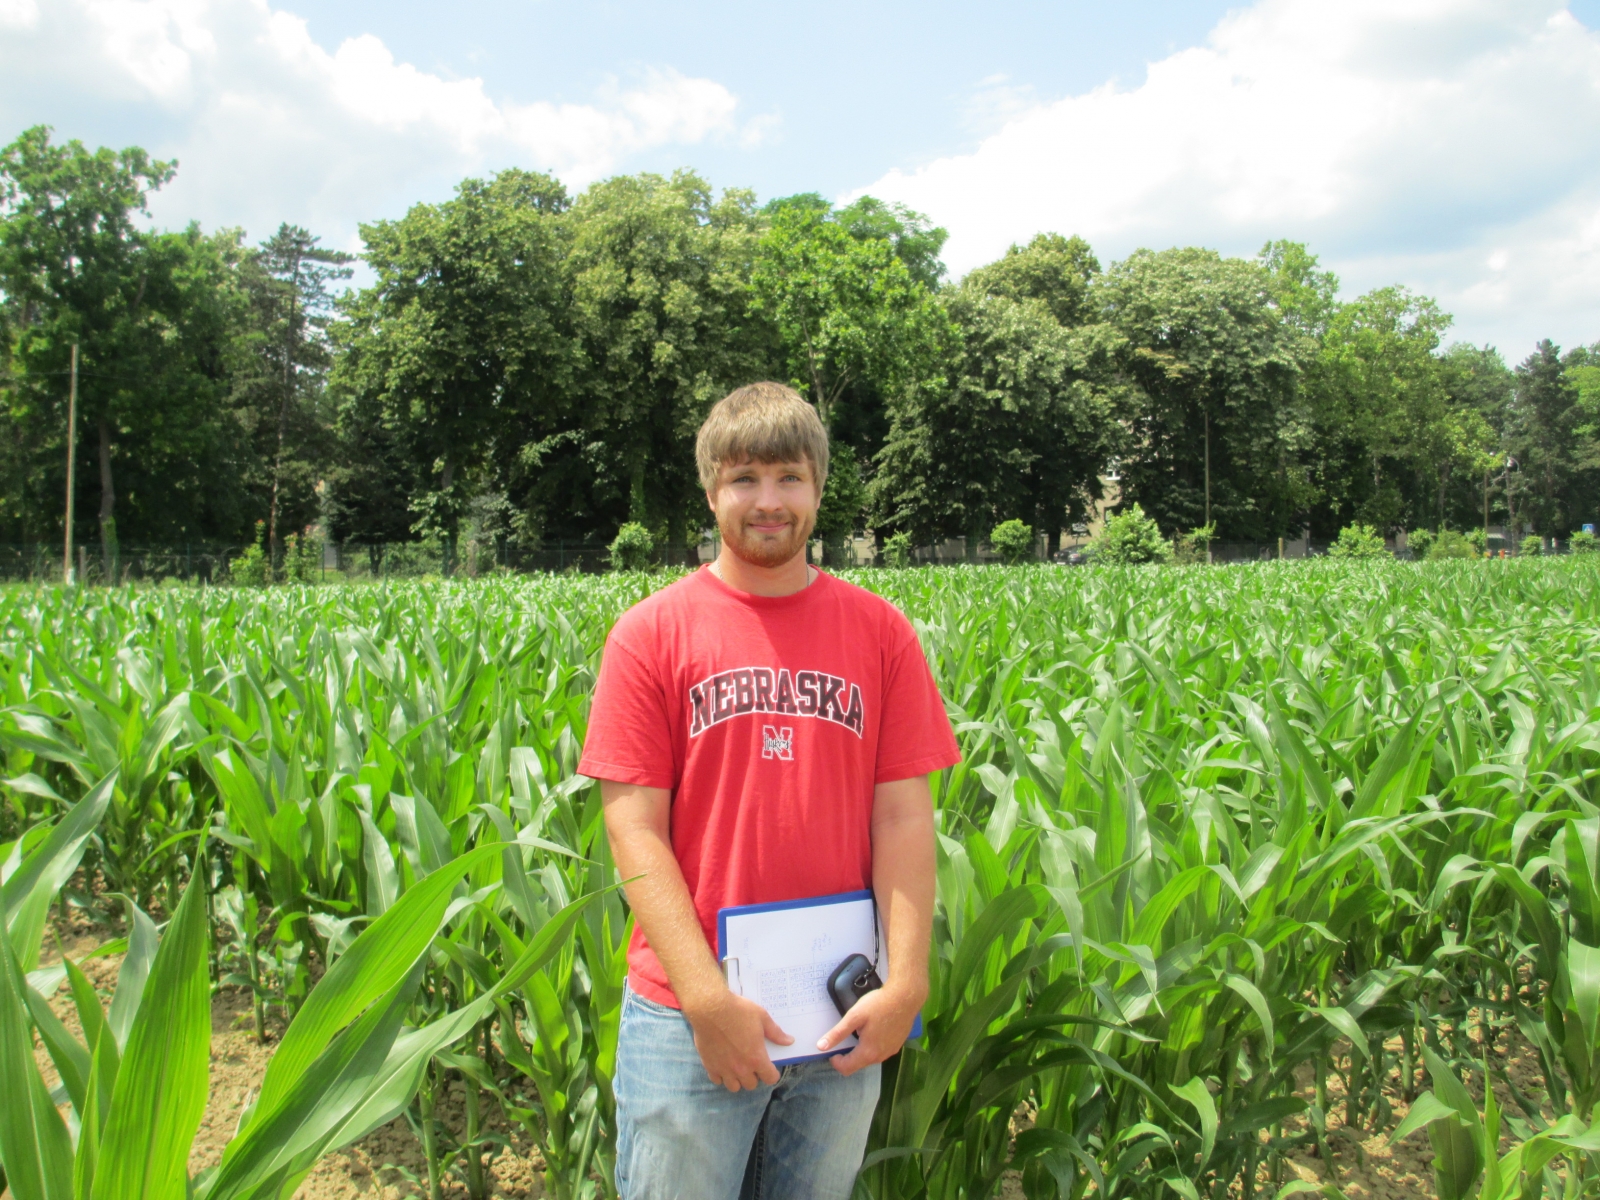 Nebraska graduate student Jeremy Milander shown with maize crop in Croatia